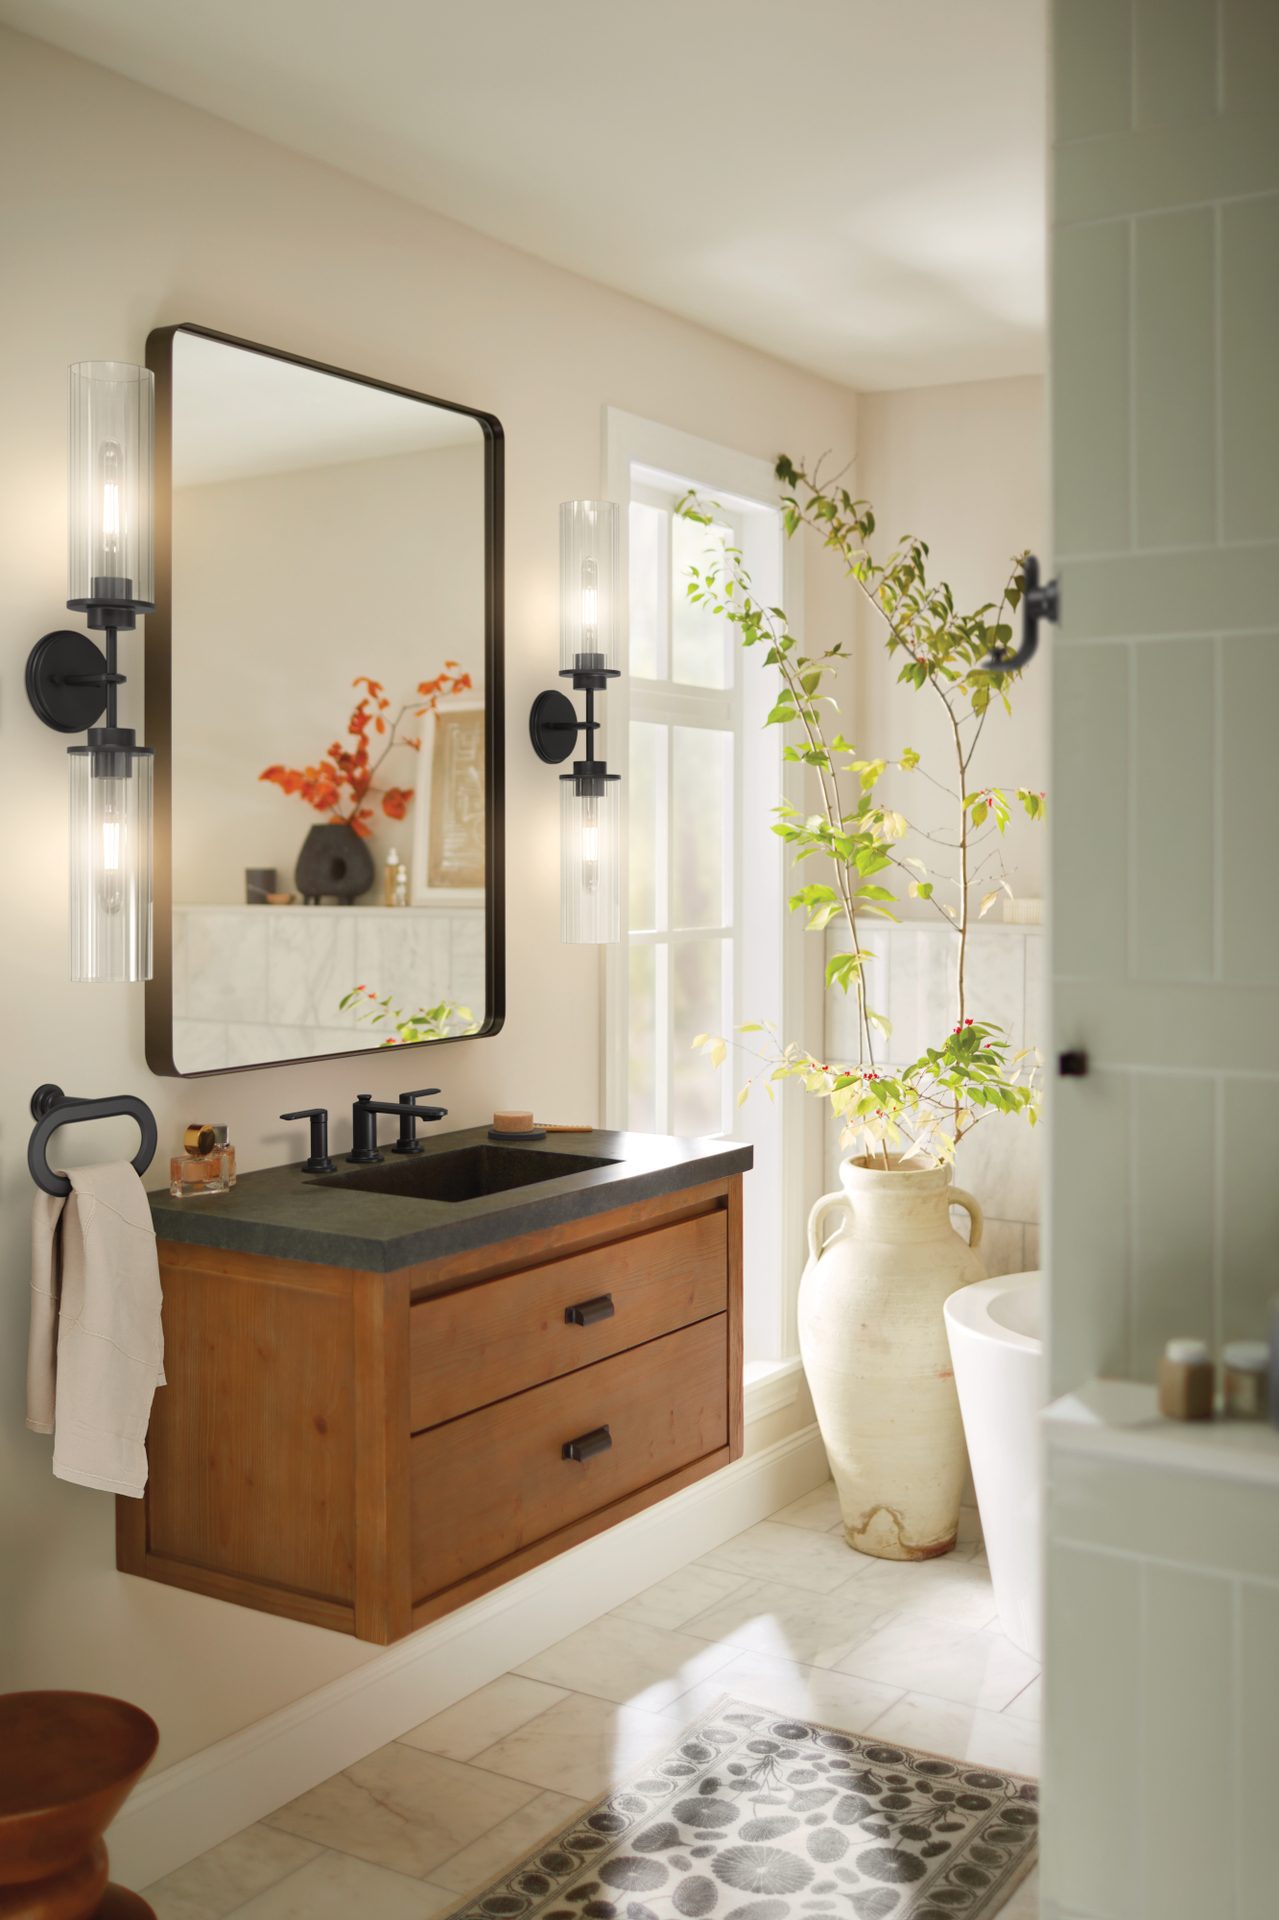 Bathroom cabinet, Plumbing fixture, Mirror, Tap, Cabinetry, Property, Building, Plant, Sink